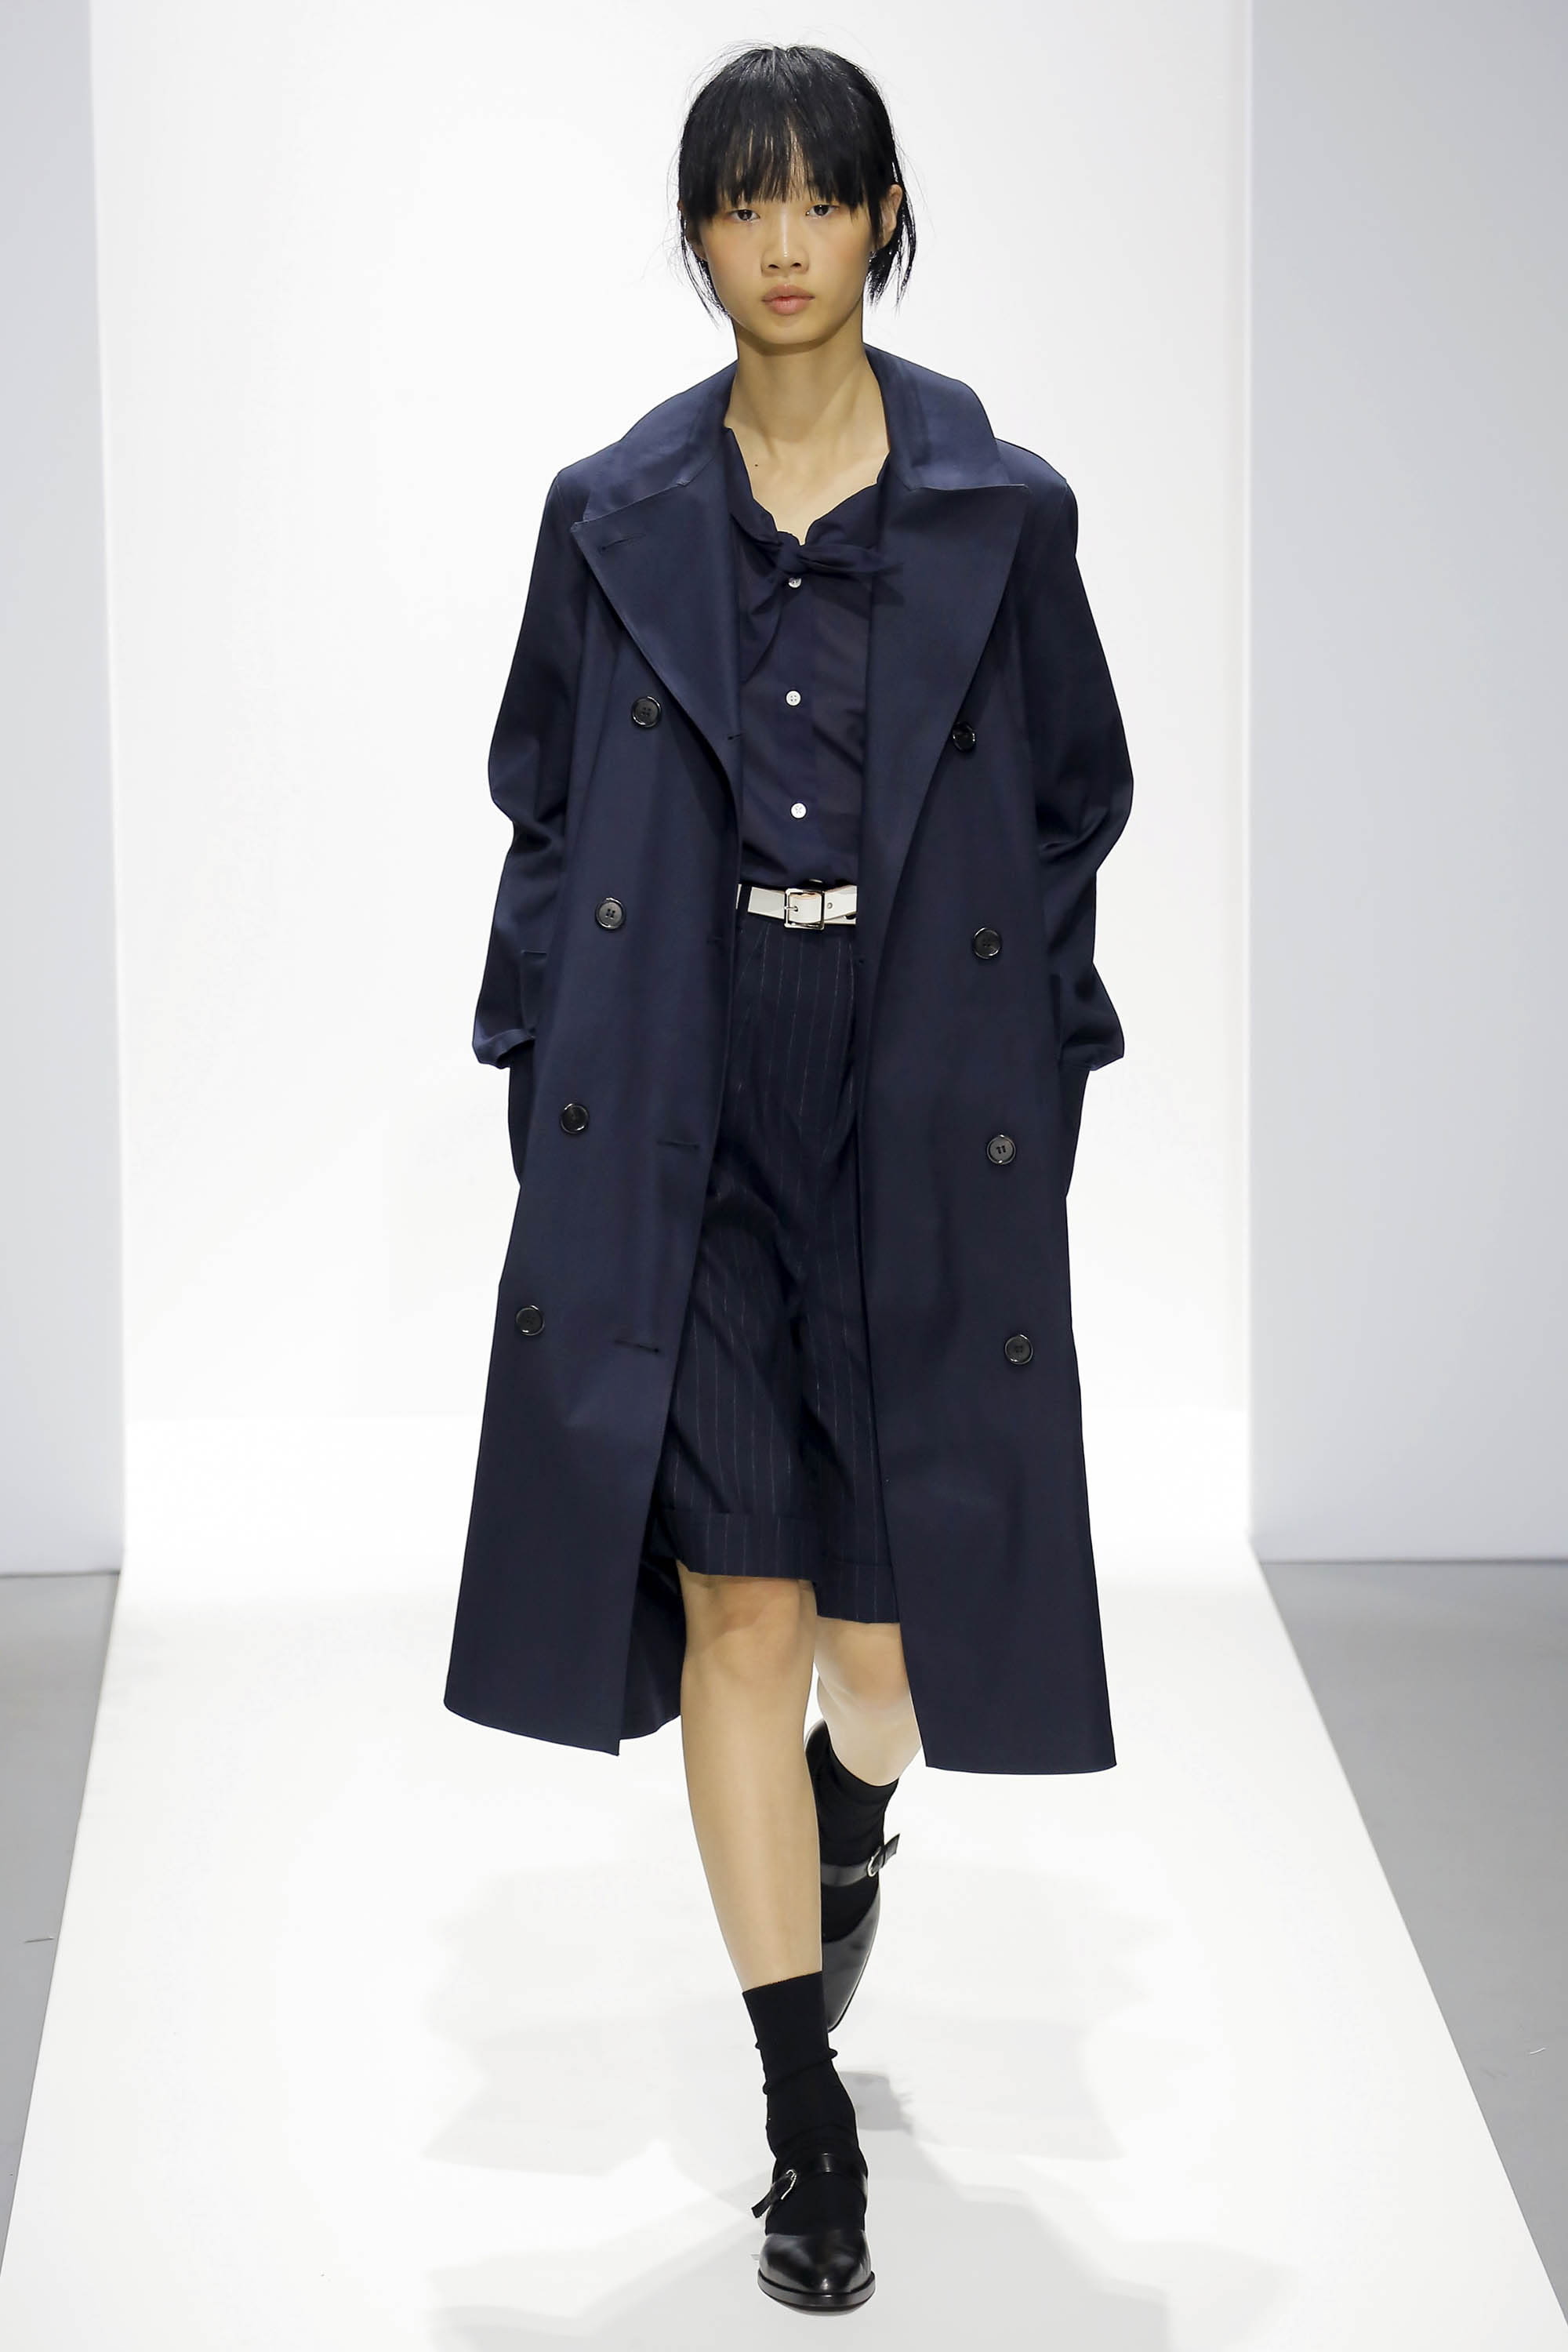 Versace S/S 18 womenswear #38 - Tagwalk: The Fashion Search Engine